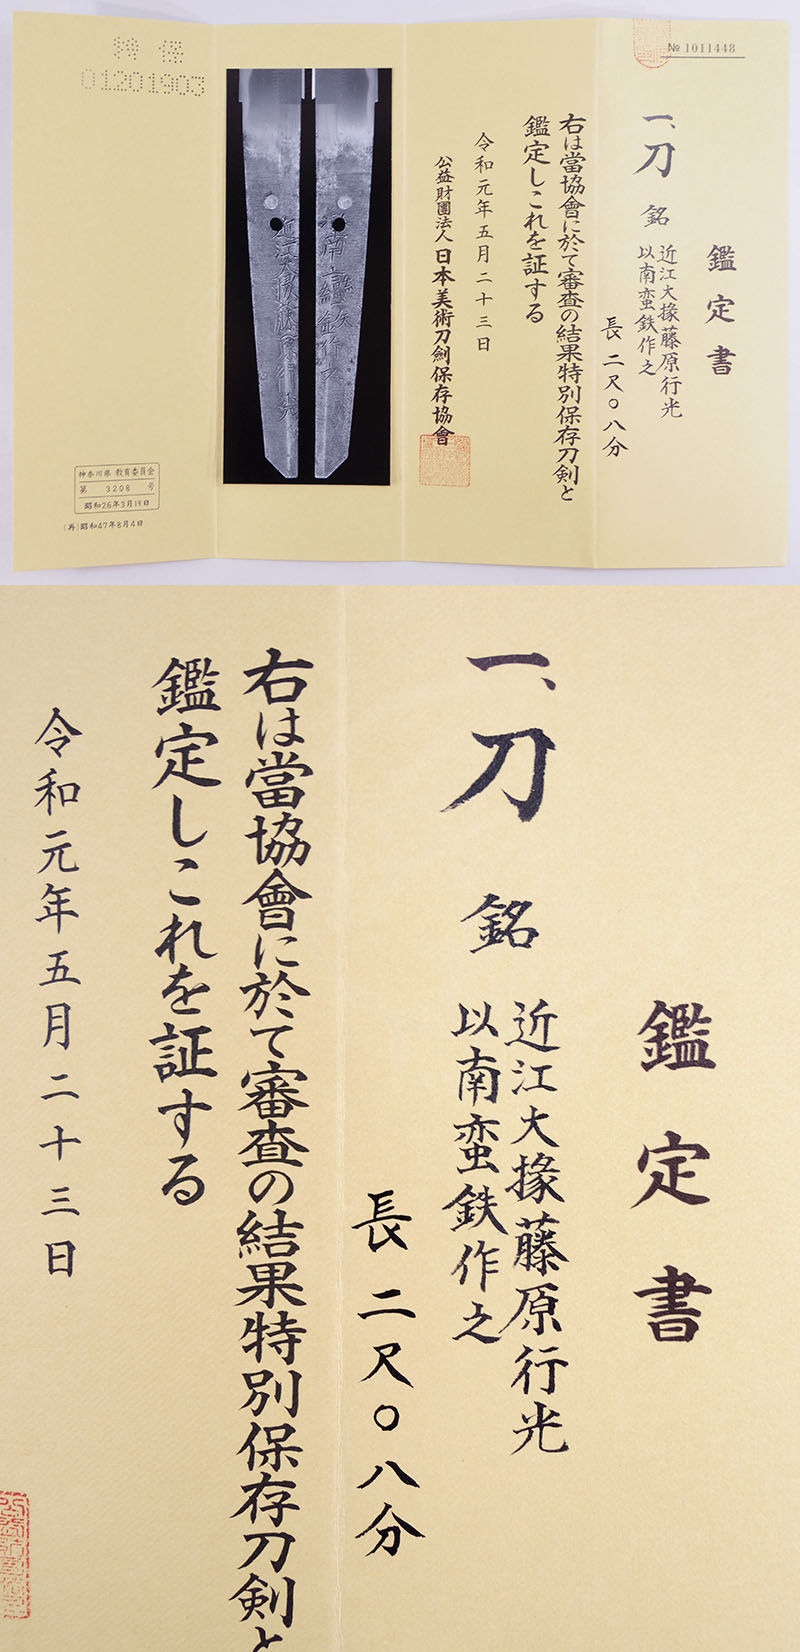 近江大掾藤原行光 Picture of Certificate